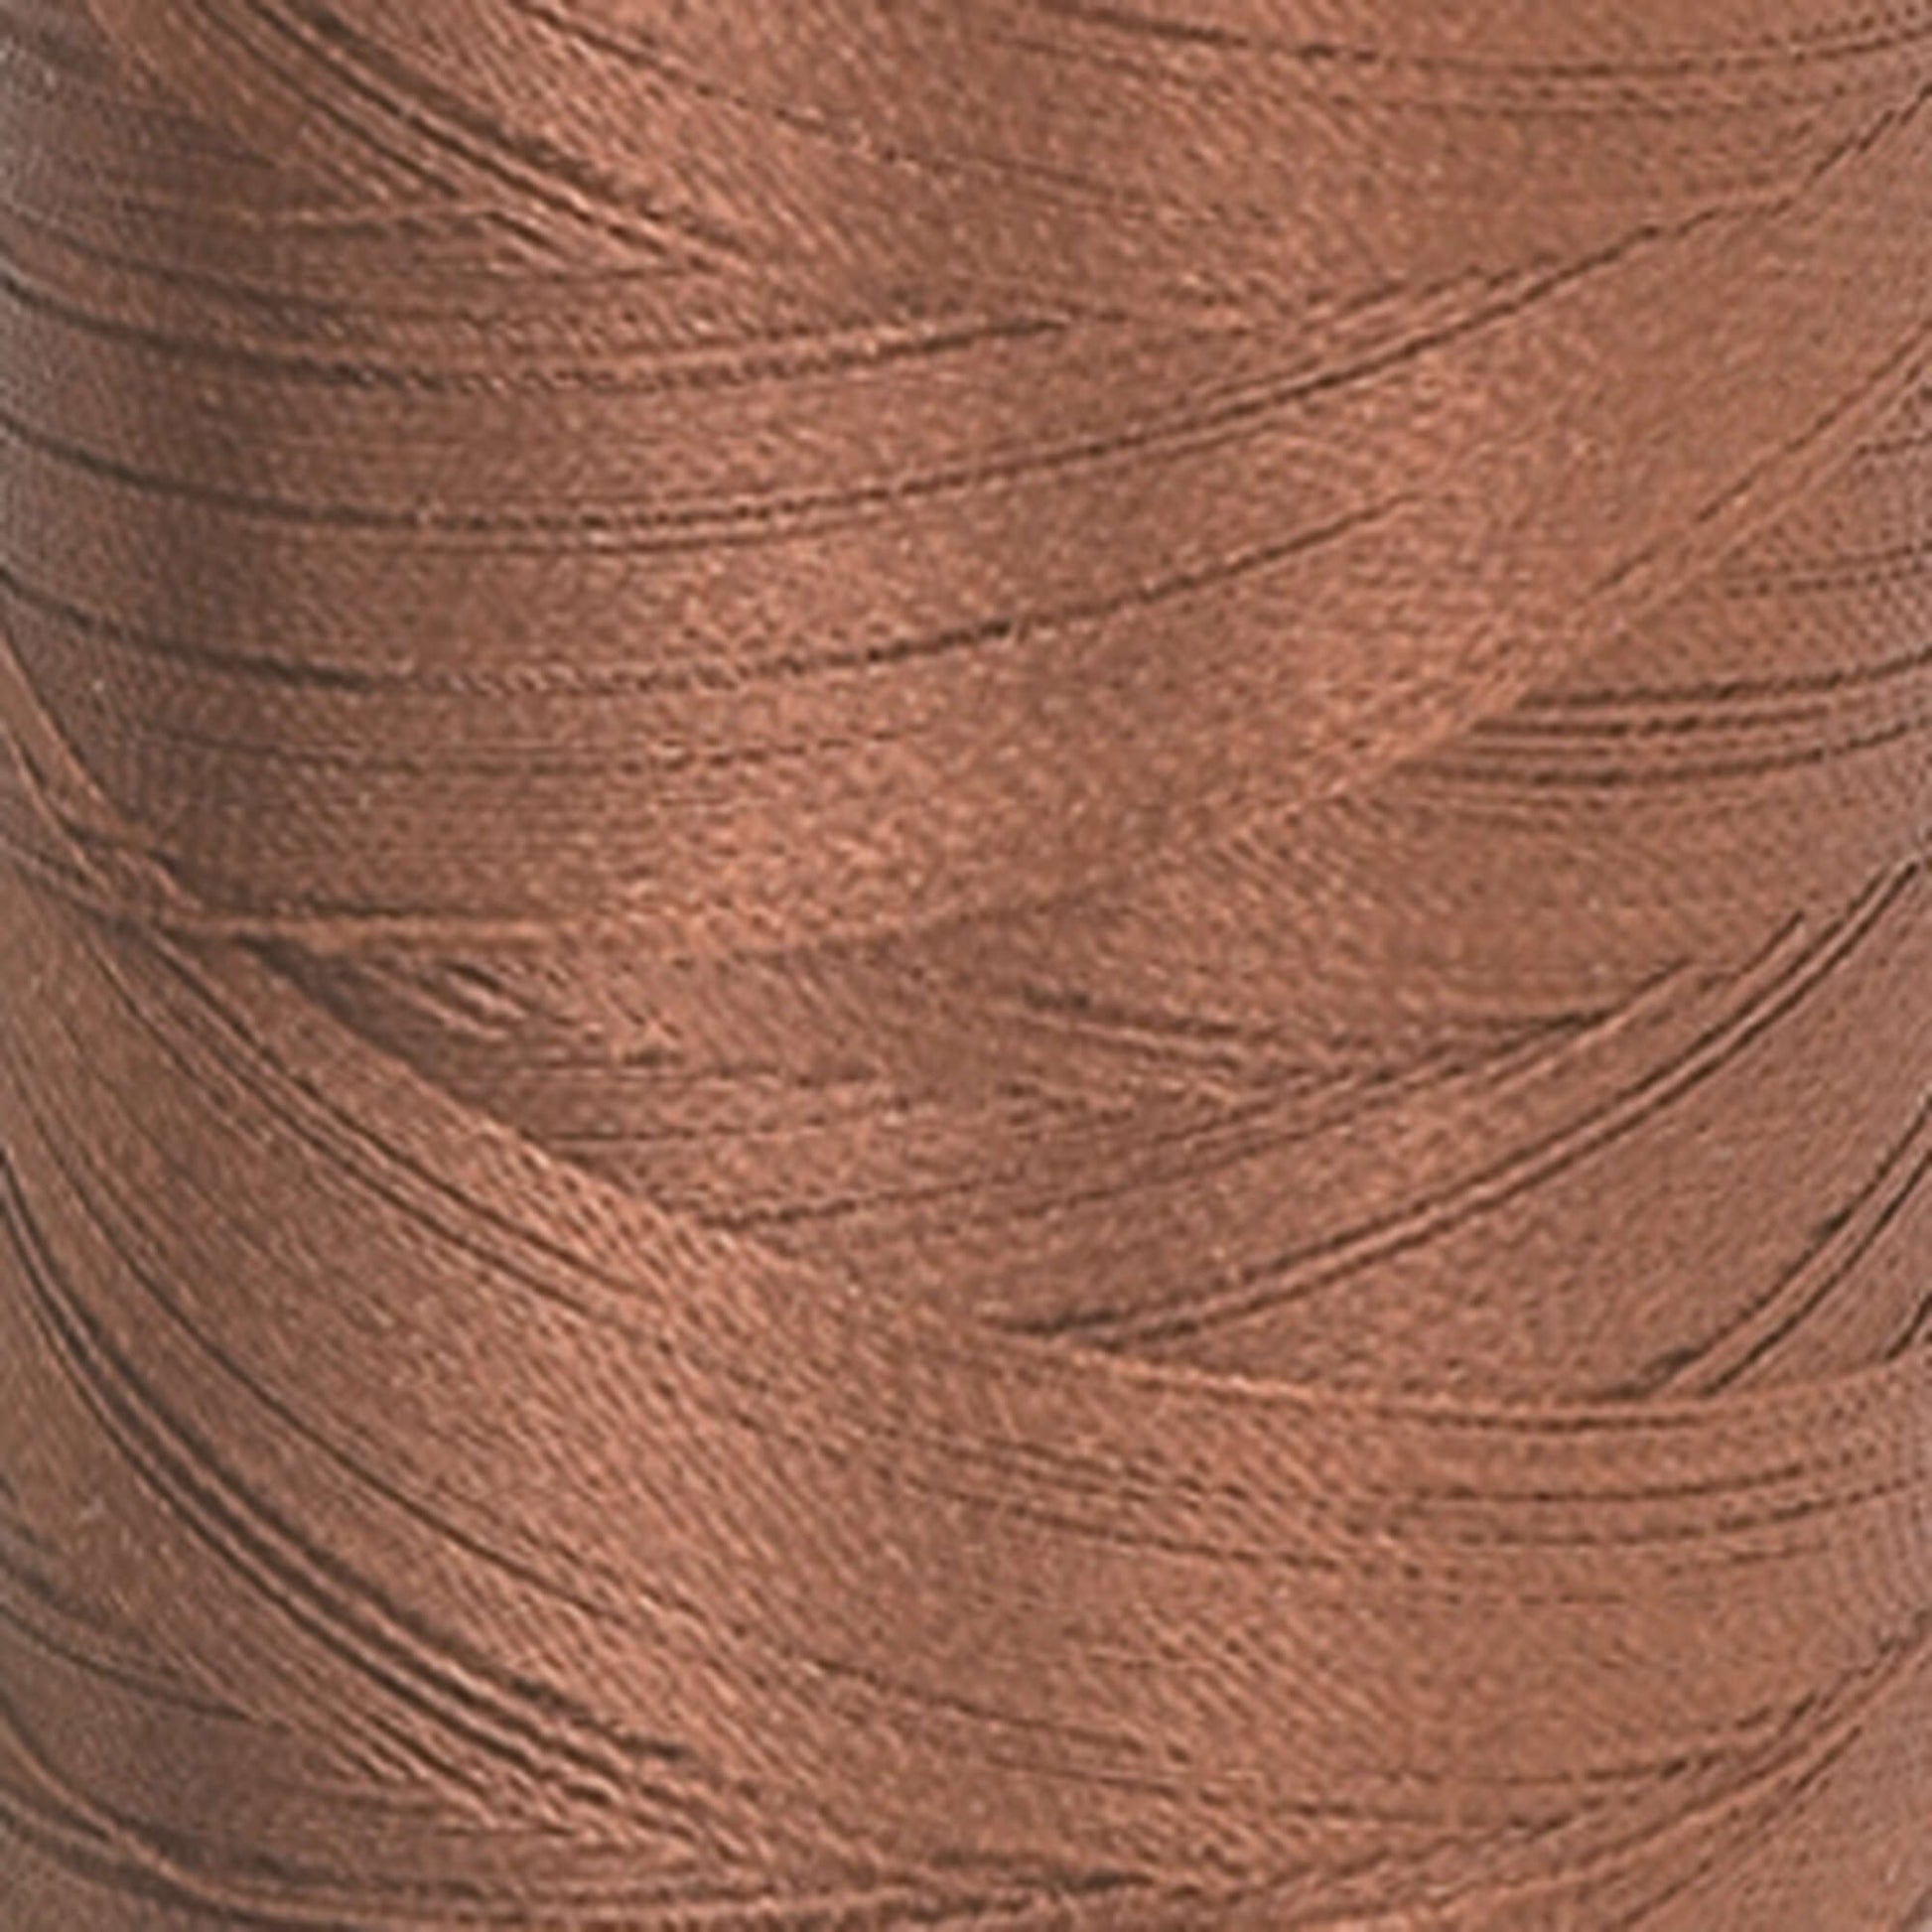 Coats & Clark Machine Embroidery Thread (1100 Yards) London Tan